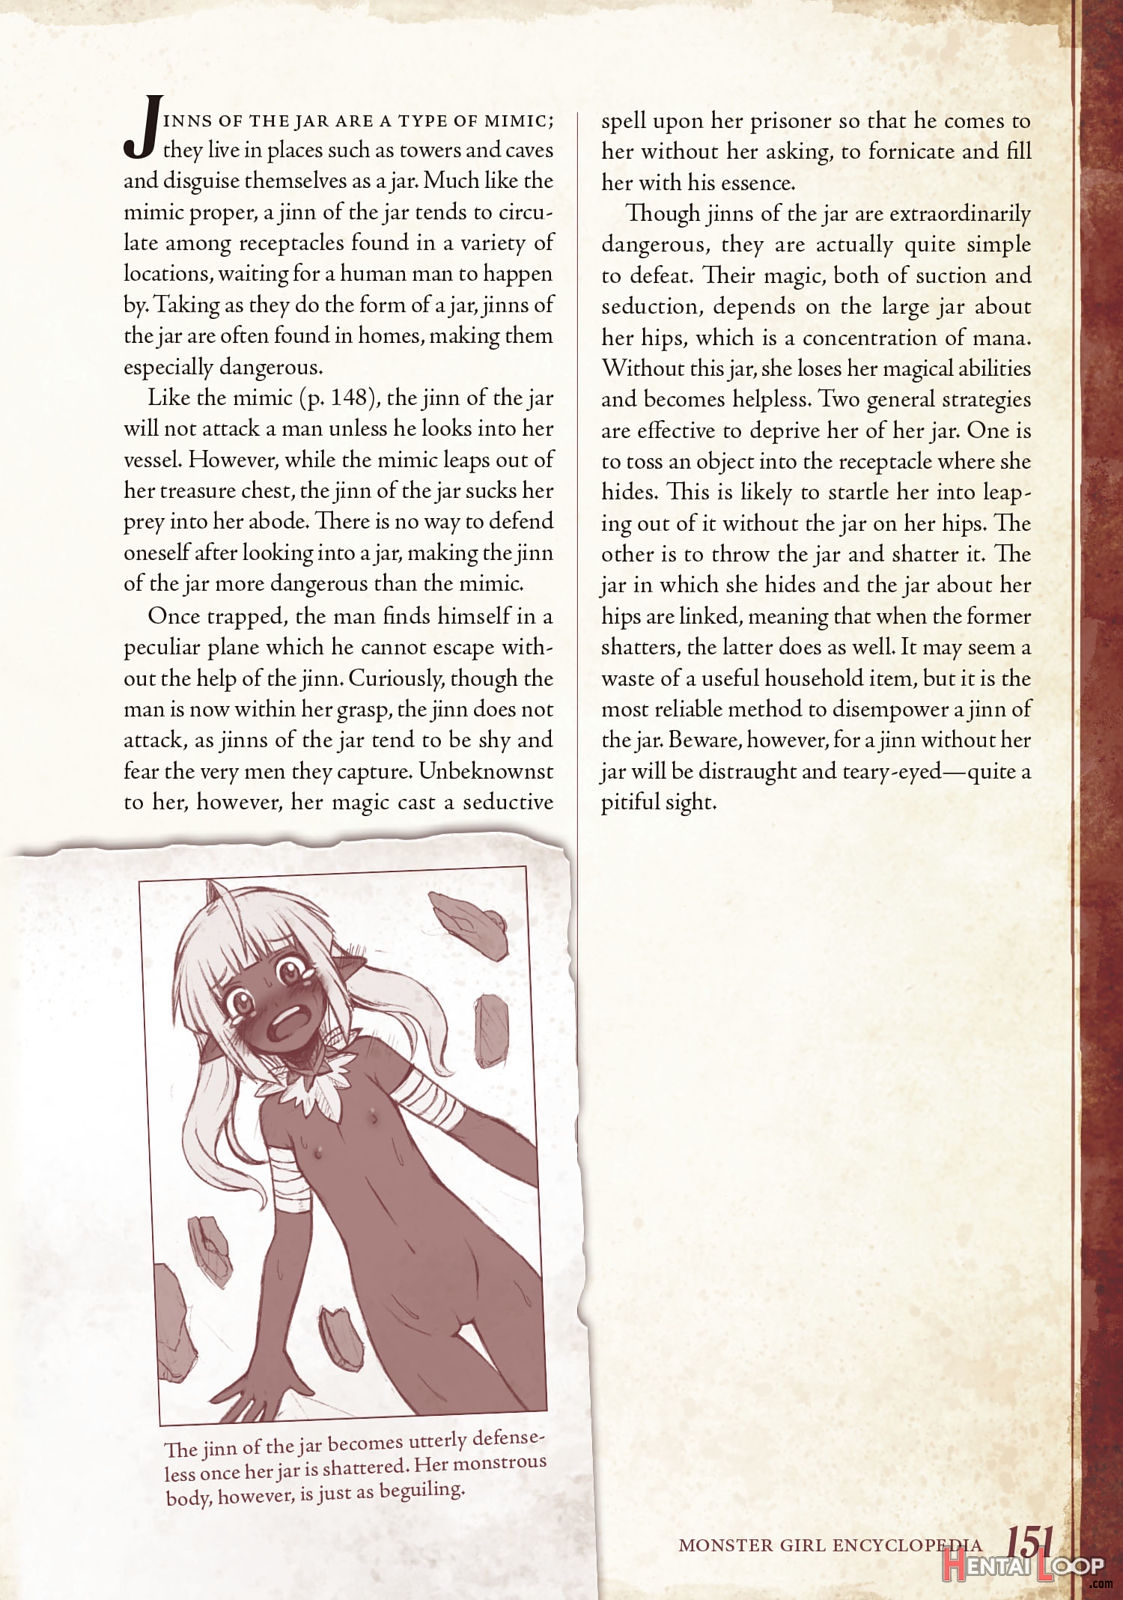 Monster Girl Encyclopedia Vol. 1 page 152